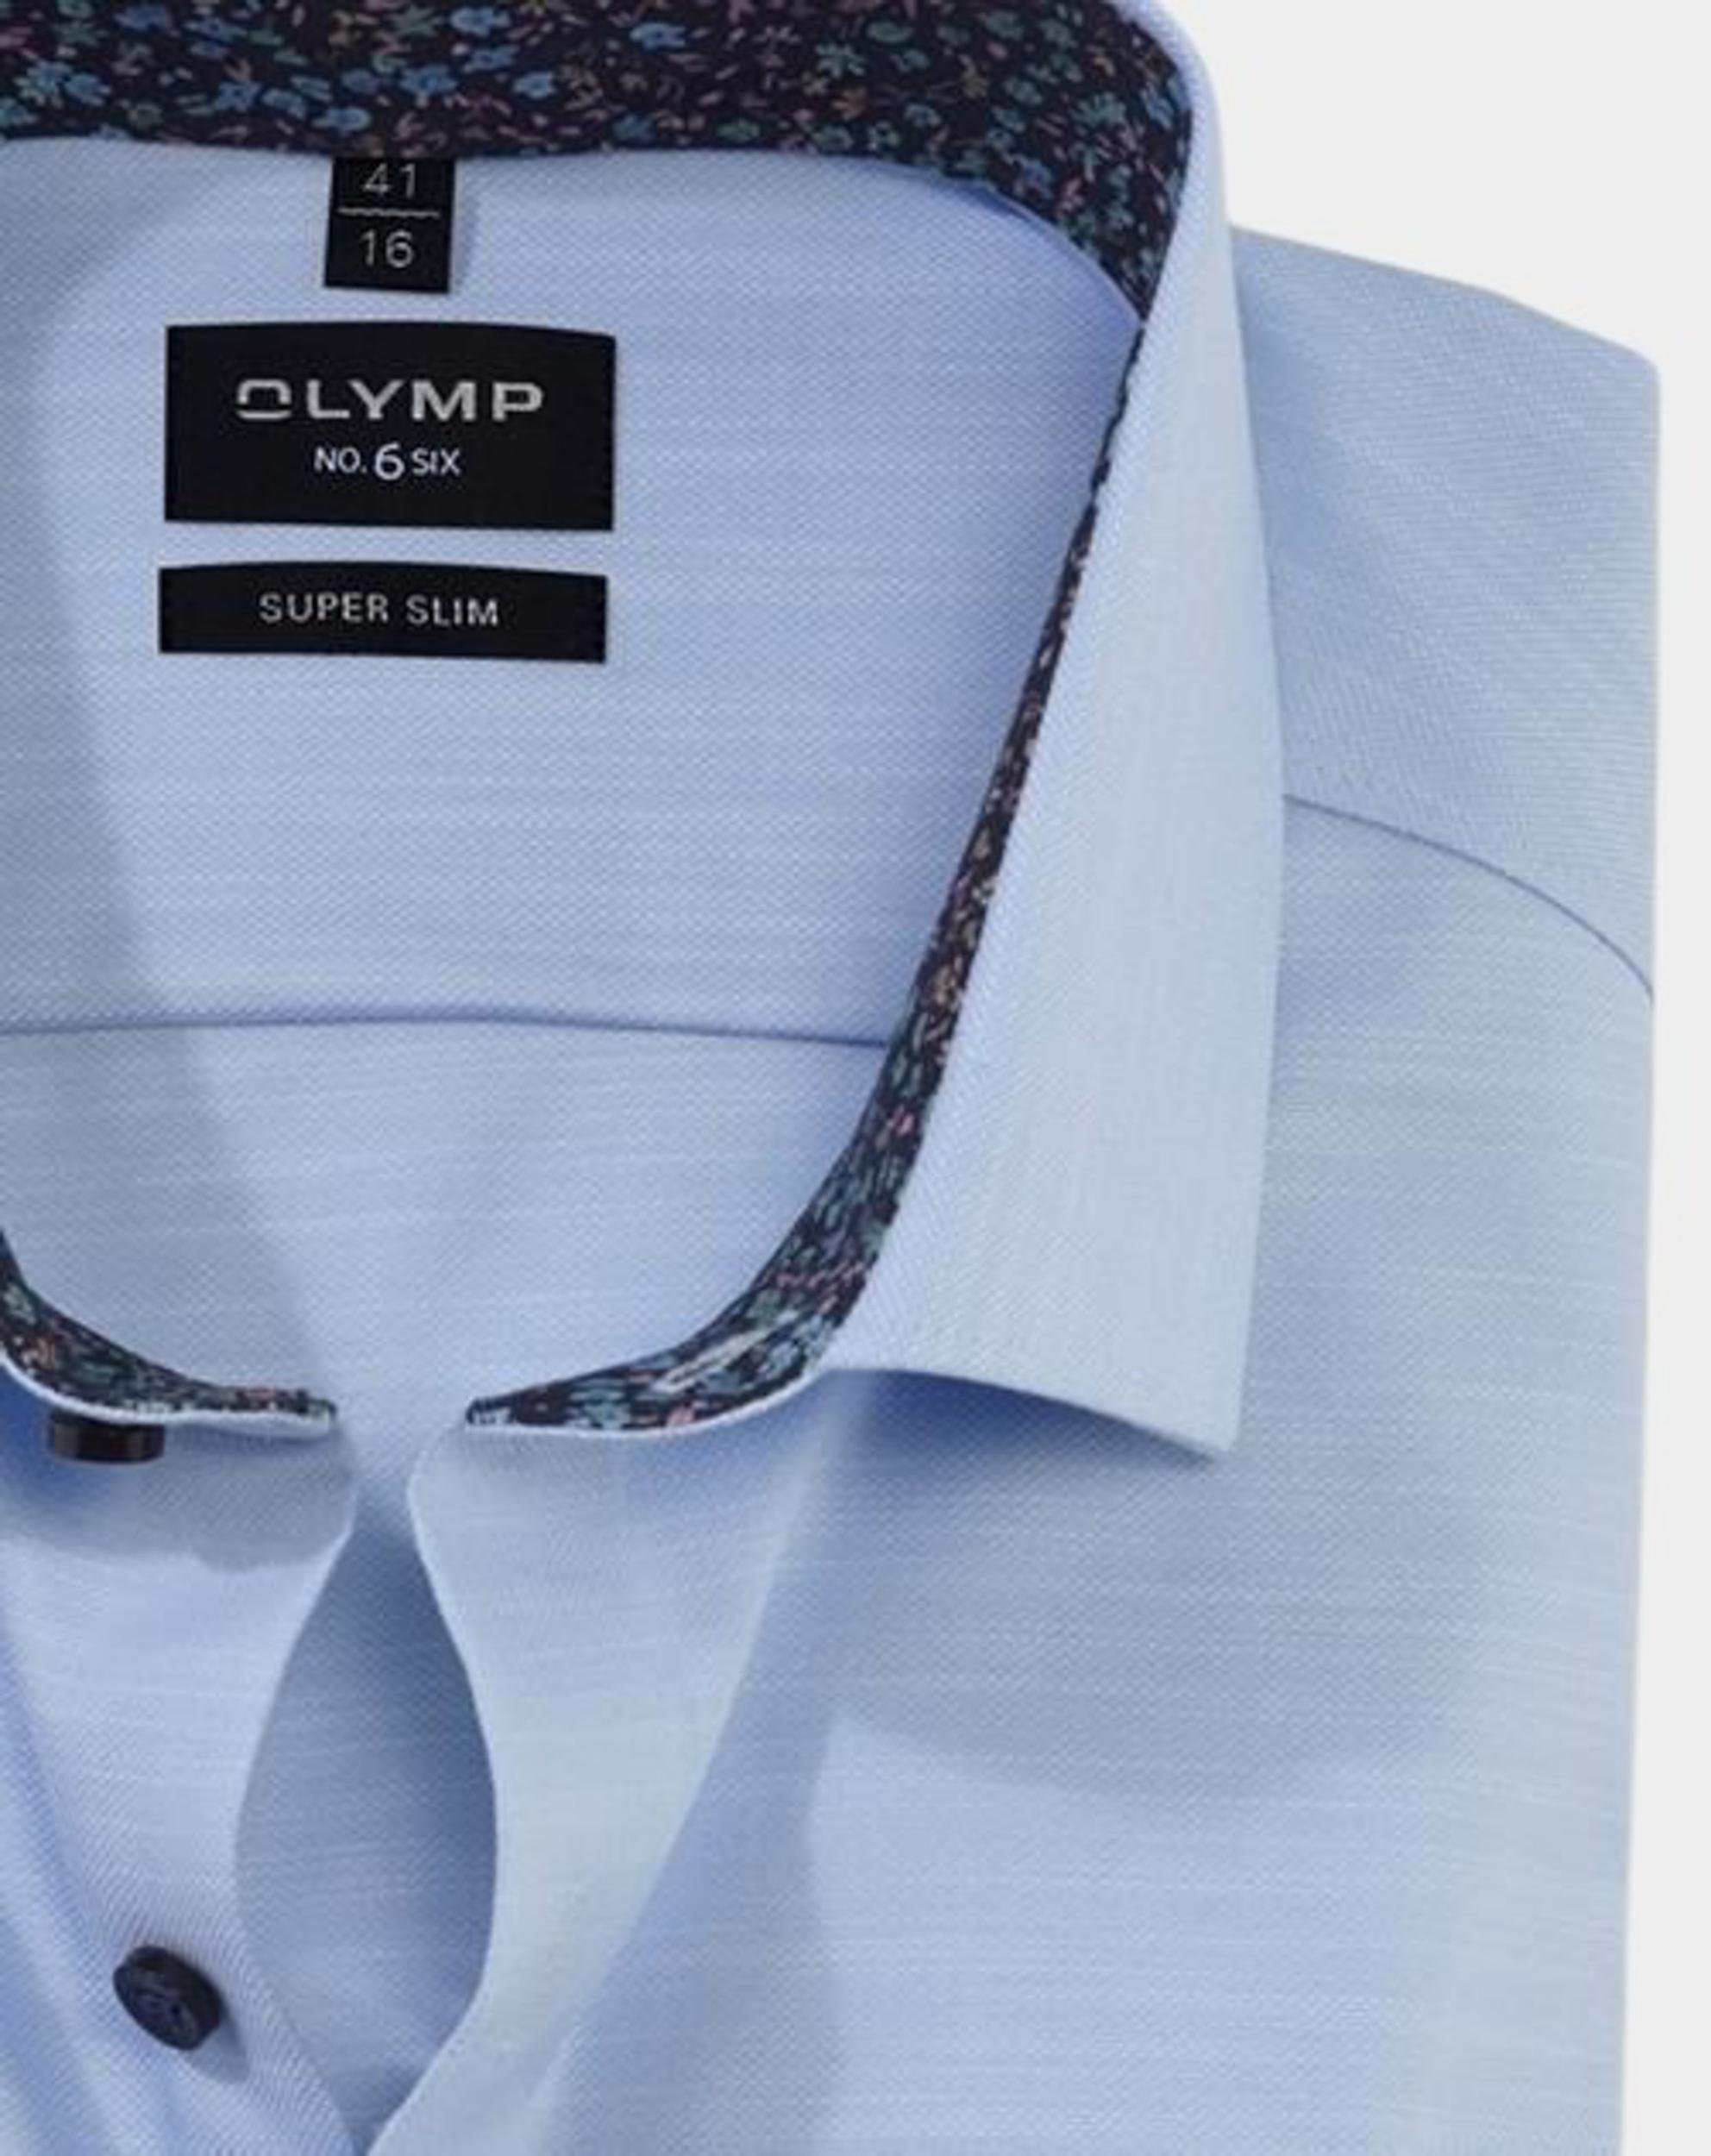 Olymp Business hemd lange mouw Blauw 2505/44 Hemden 250544/11